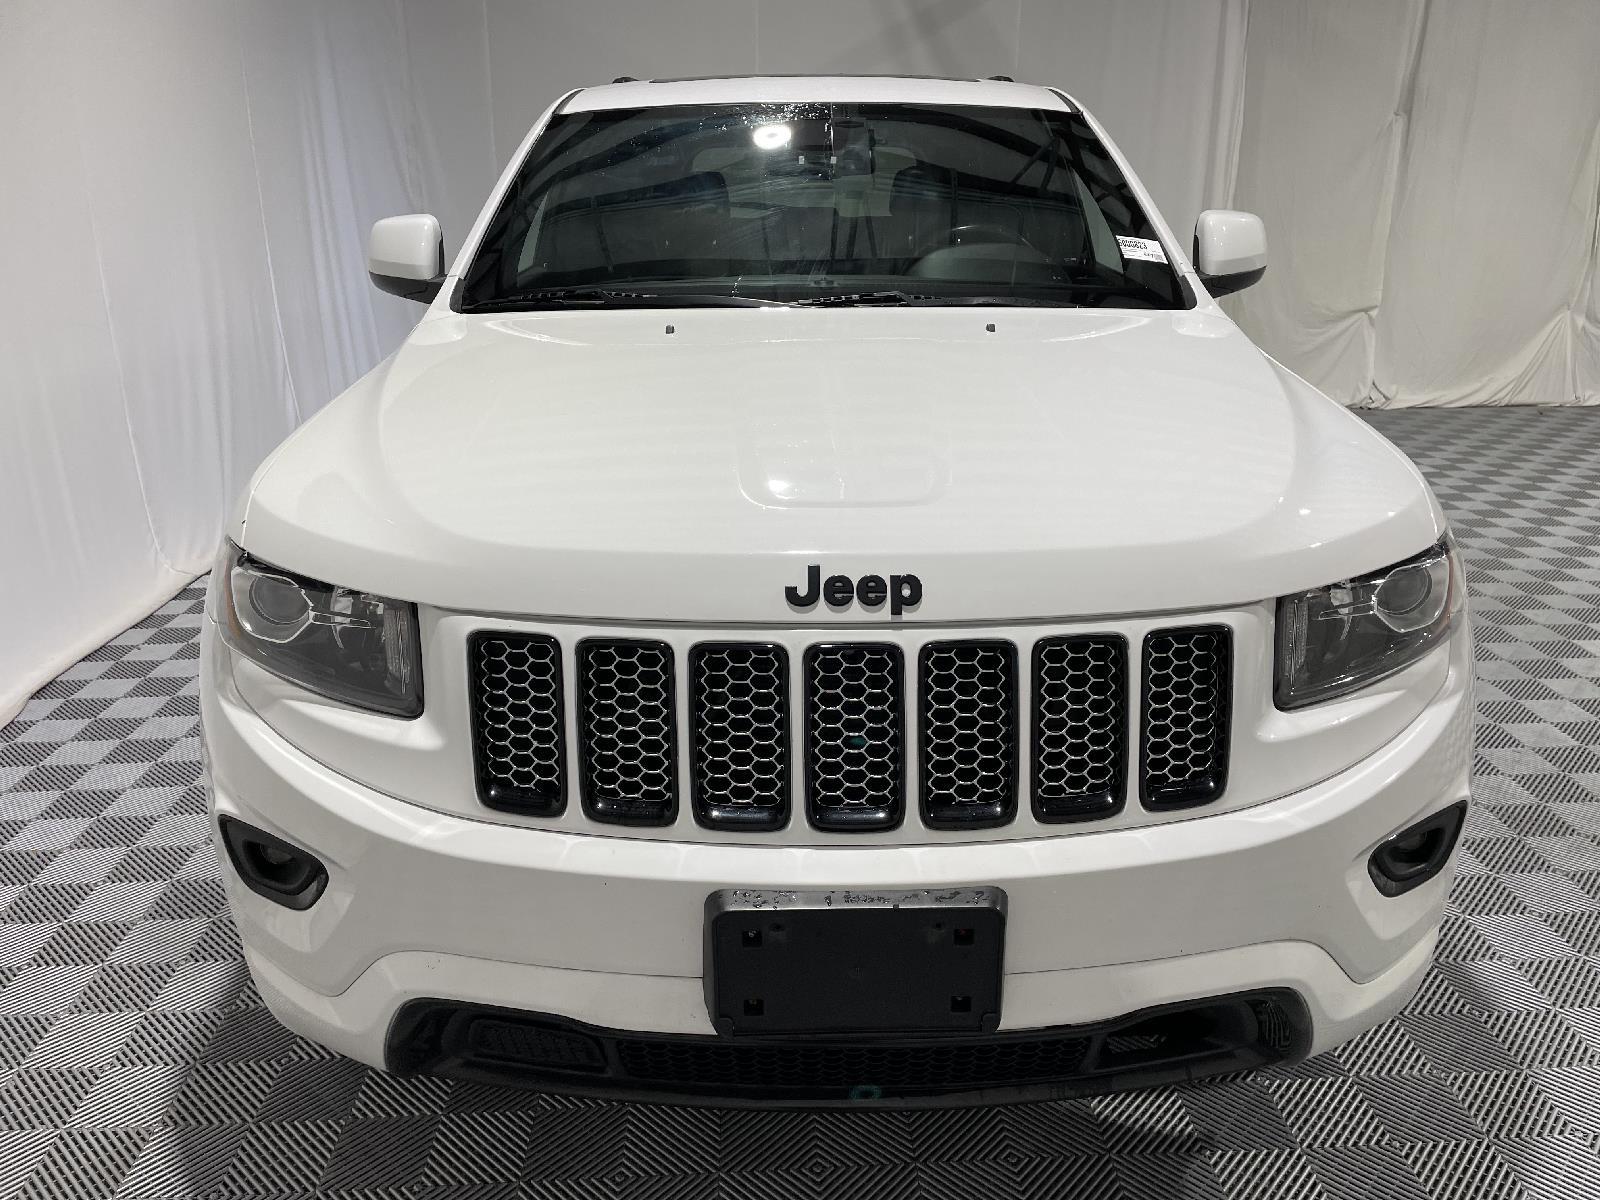 Used 2015 Jeep Grand Cherokee Altitude SUV for sale in St Joseph MO